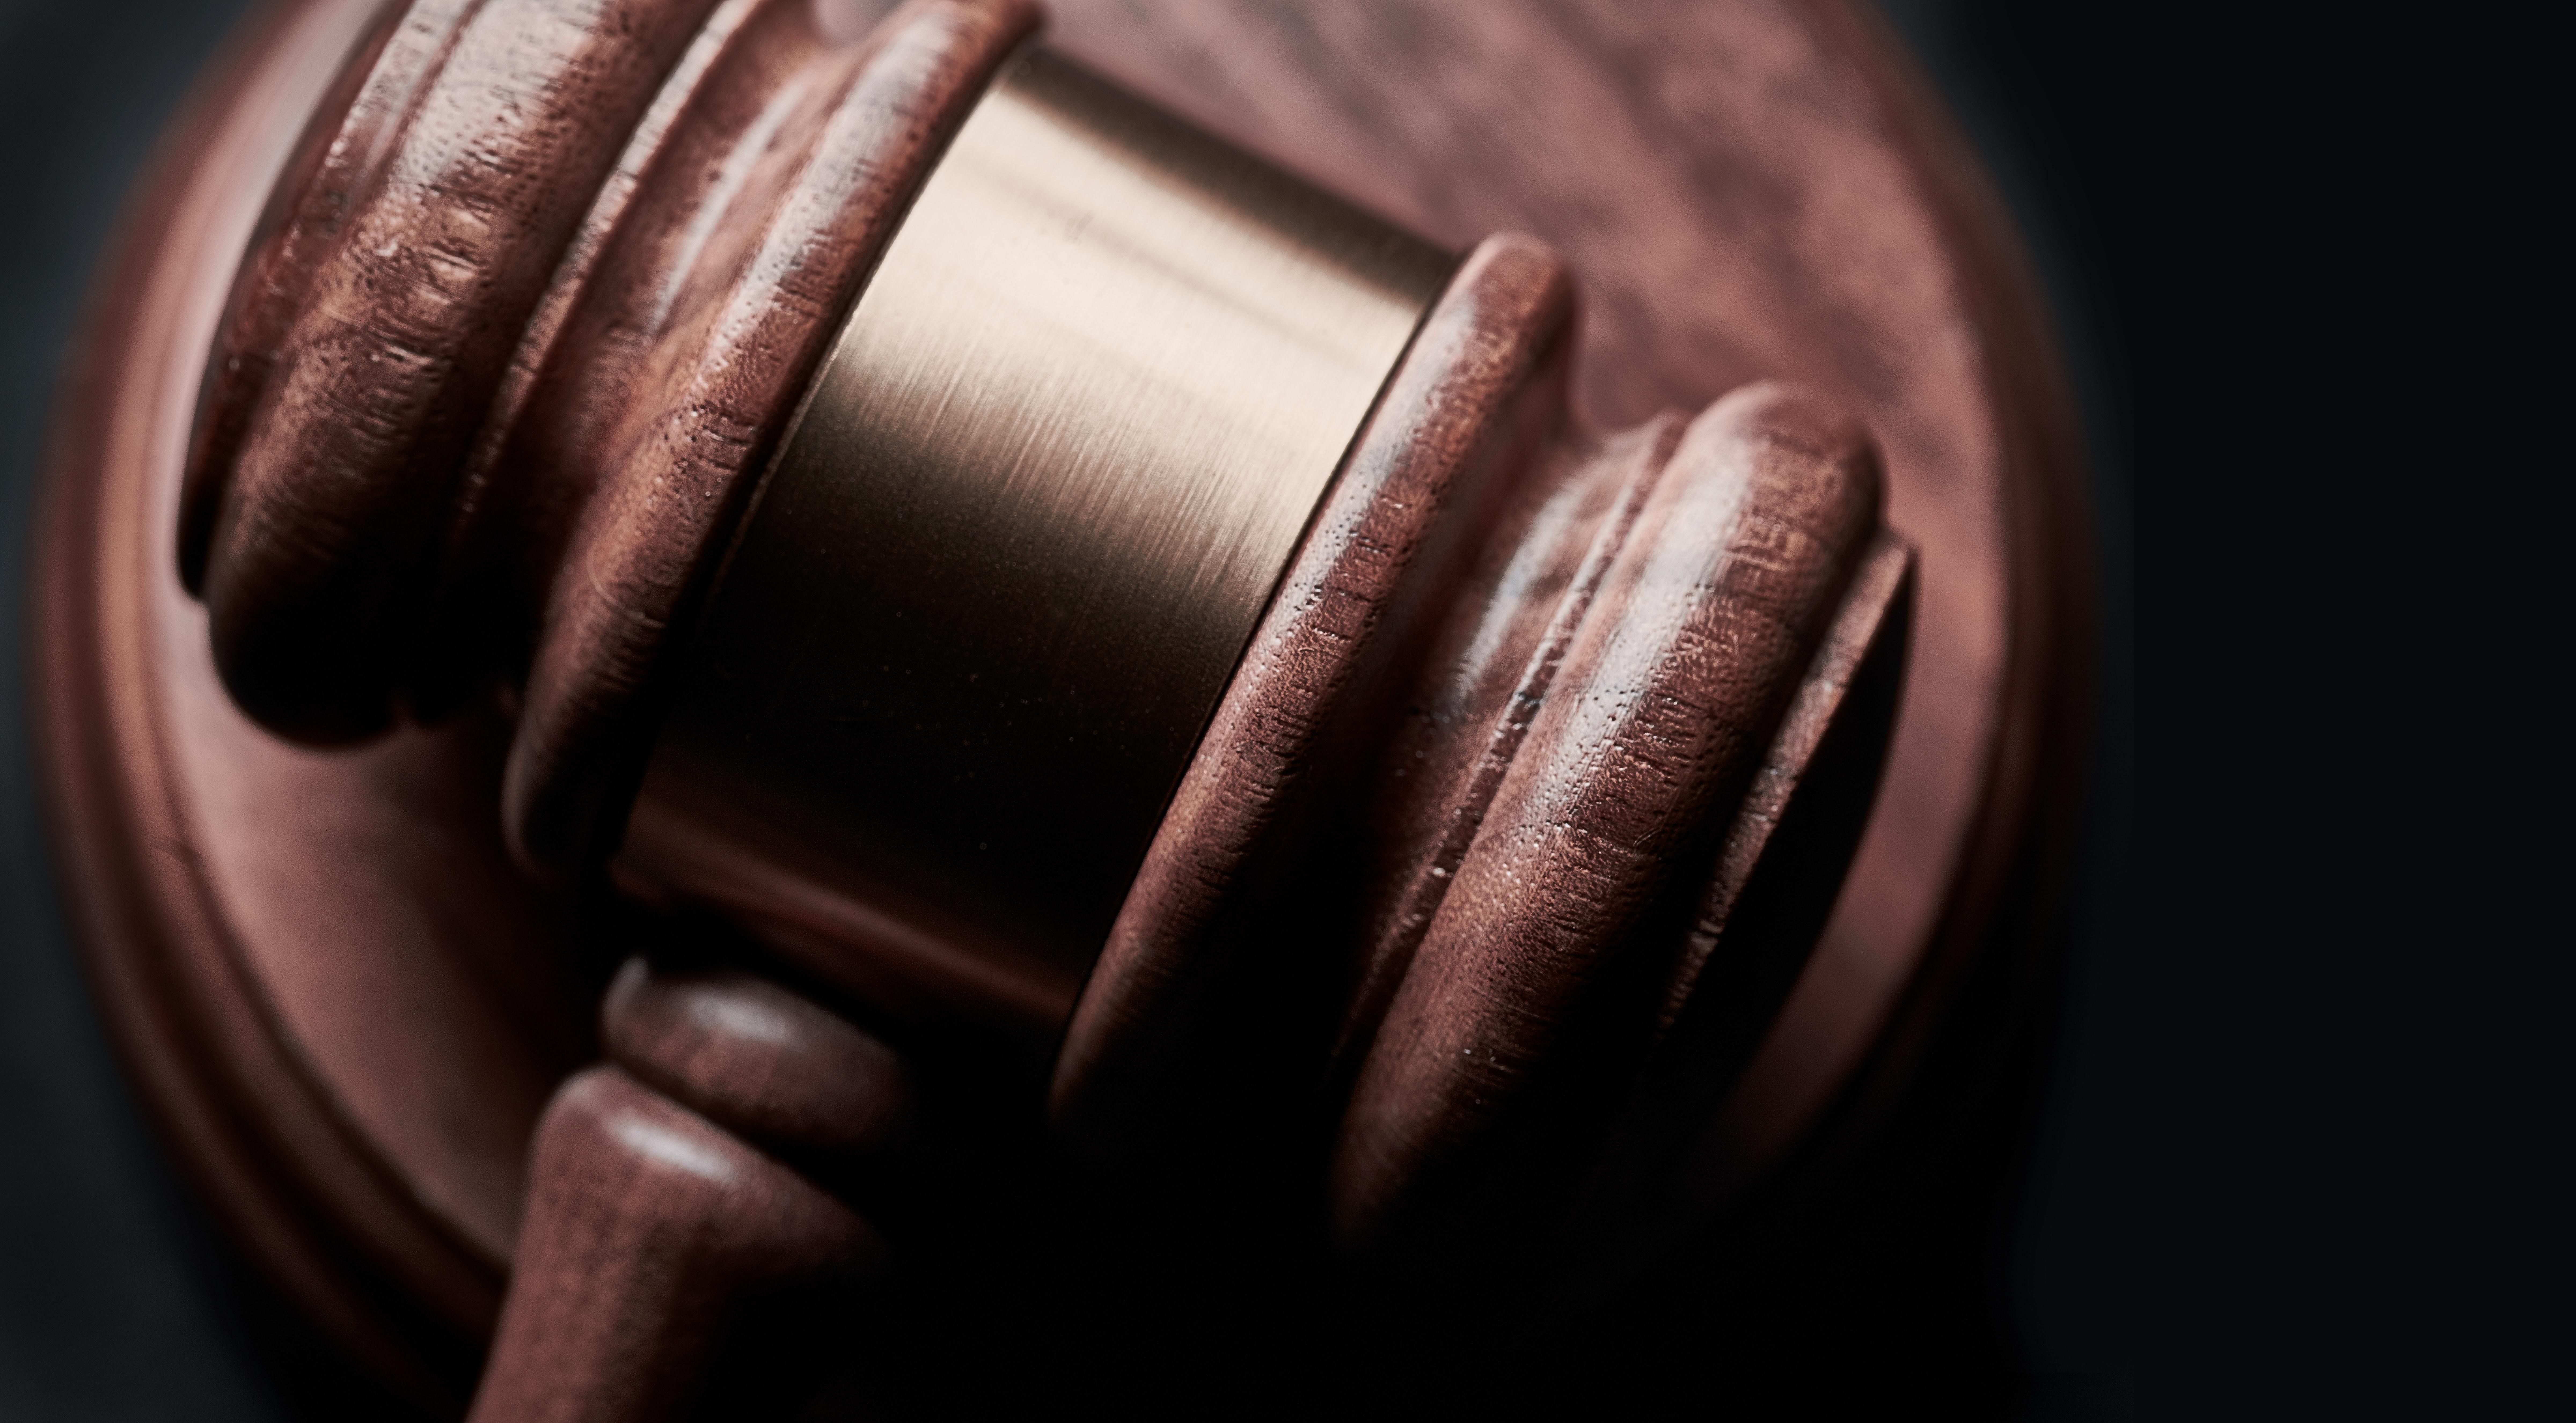 'Judging' Her Progress - How a Nebraska Judge Found a New Normal after Aneurysm